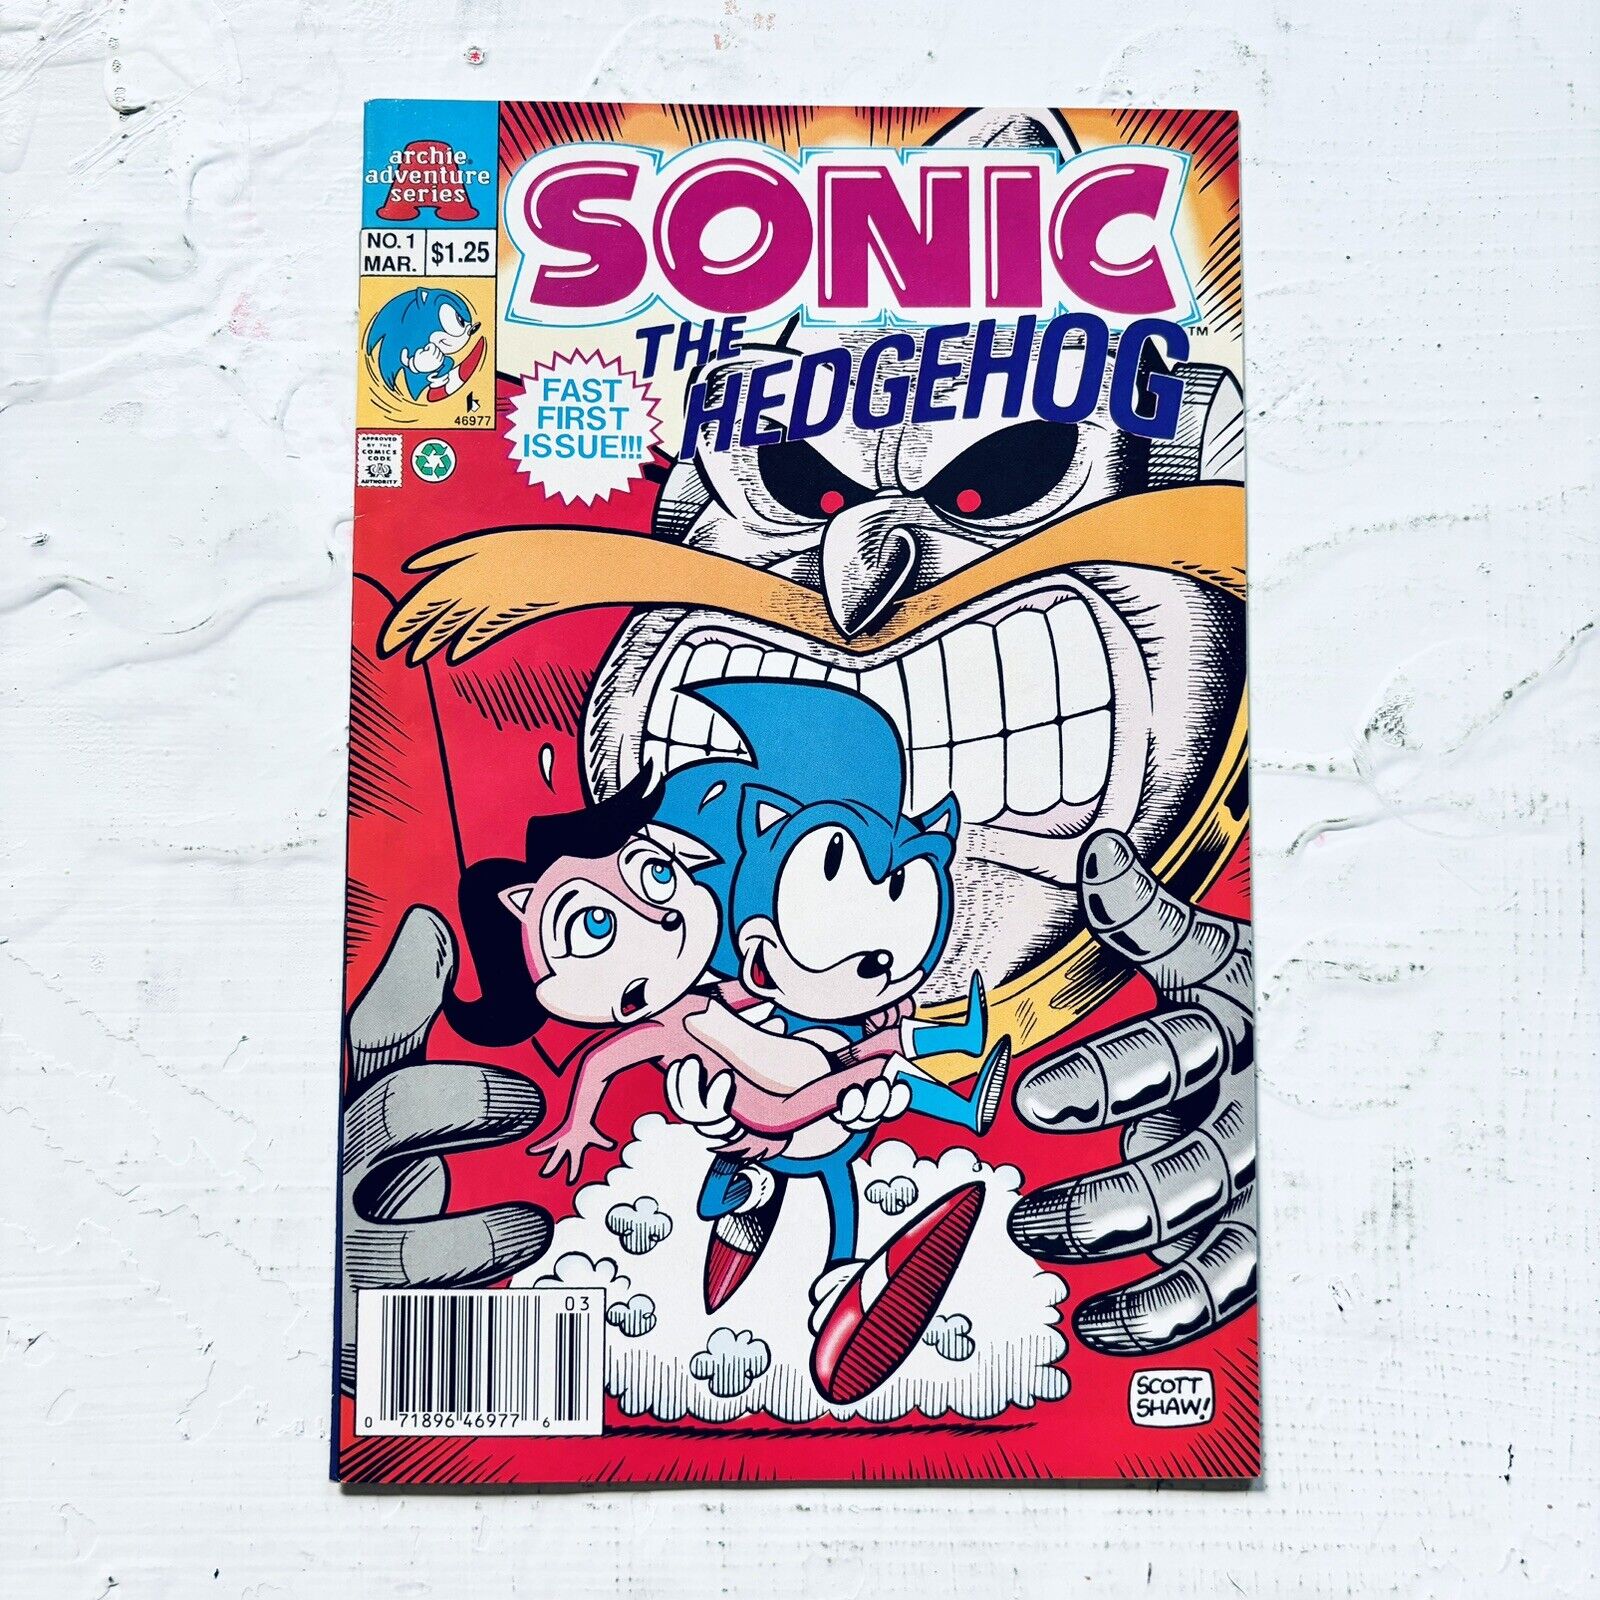 Sonic the Hedgehog # 1 || Newsstand Edition || Scott Shaw || 1993